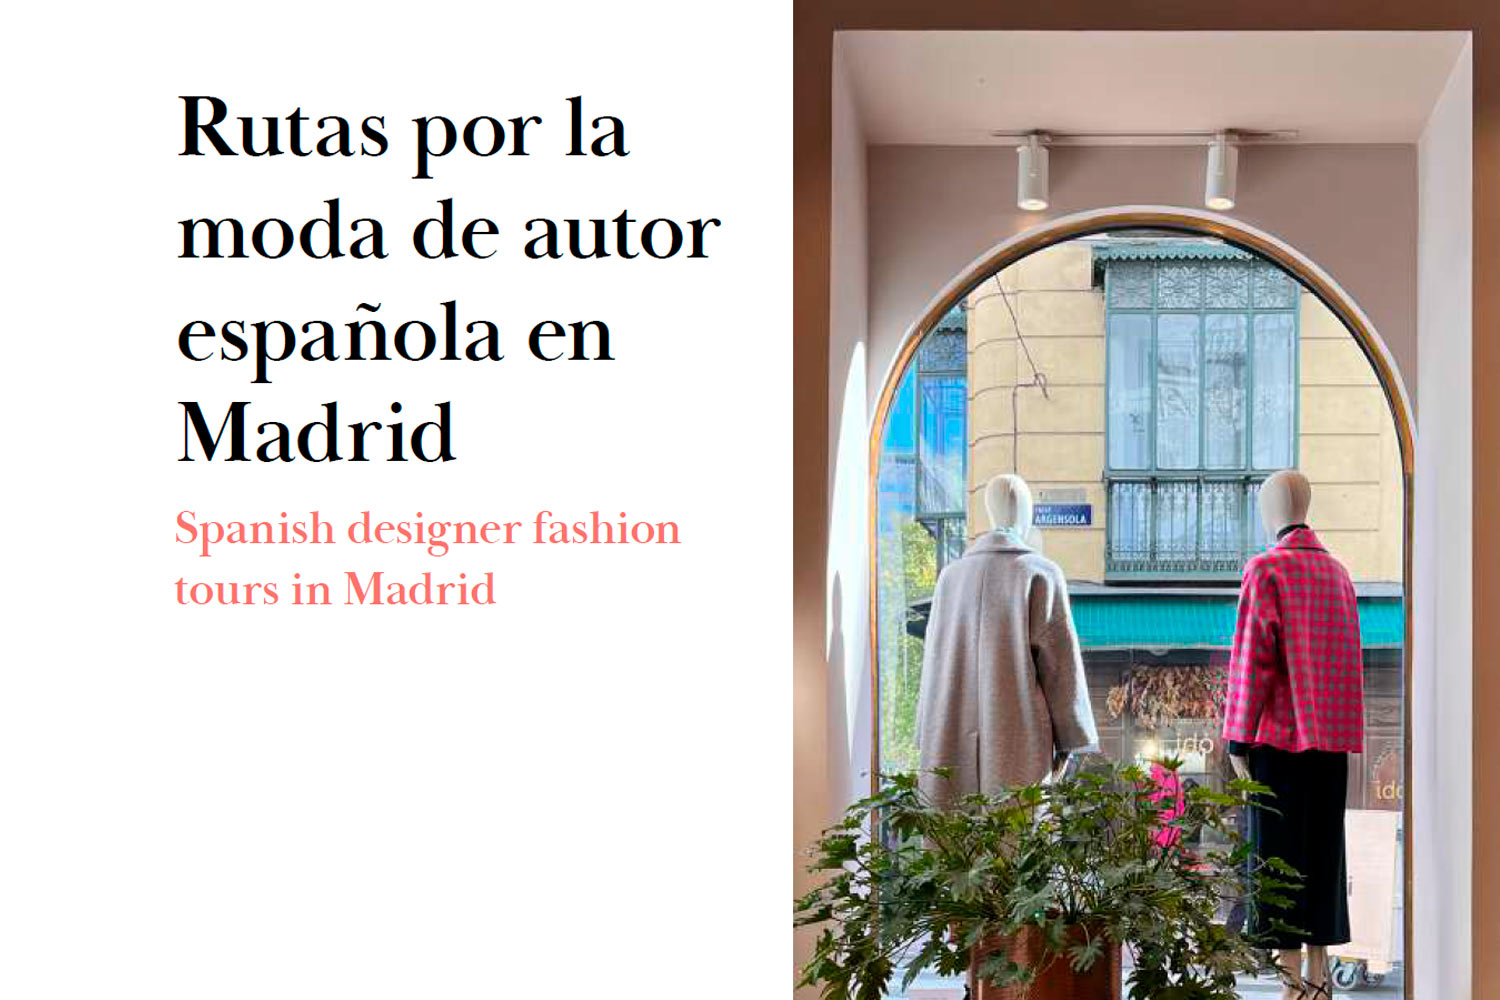 Spanish designer fashion tour Madrid